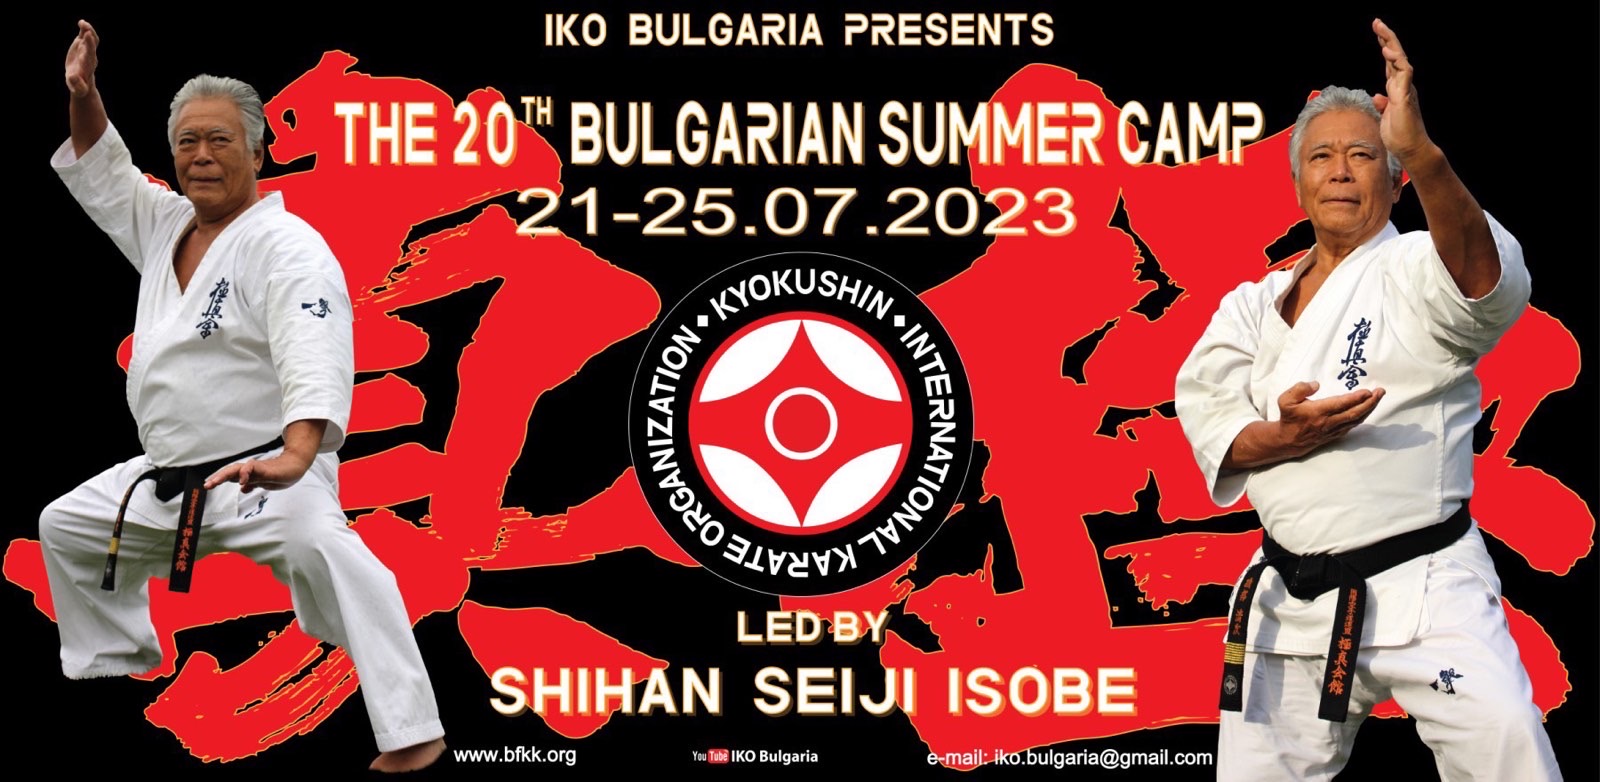 The 20th Bulgarian Summer Camp 21-25.07.2023